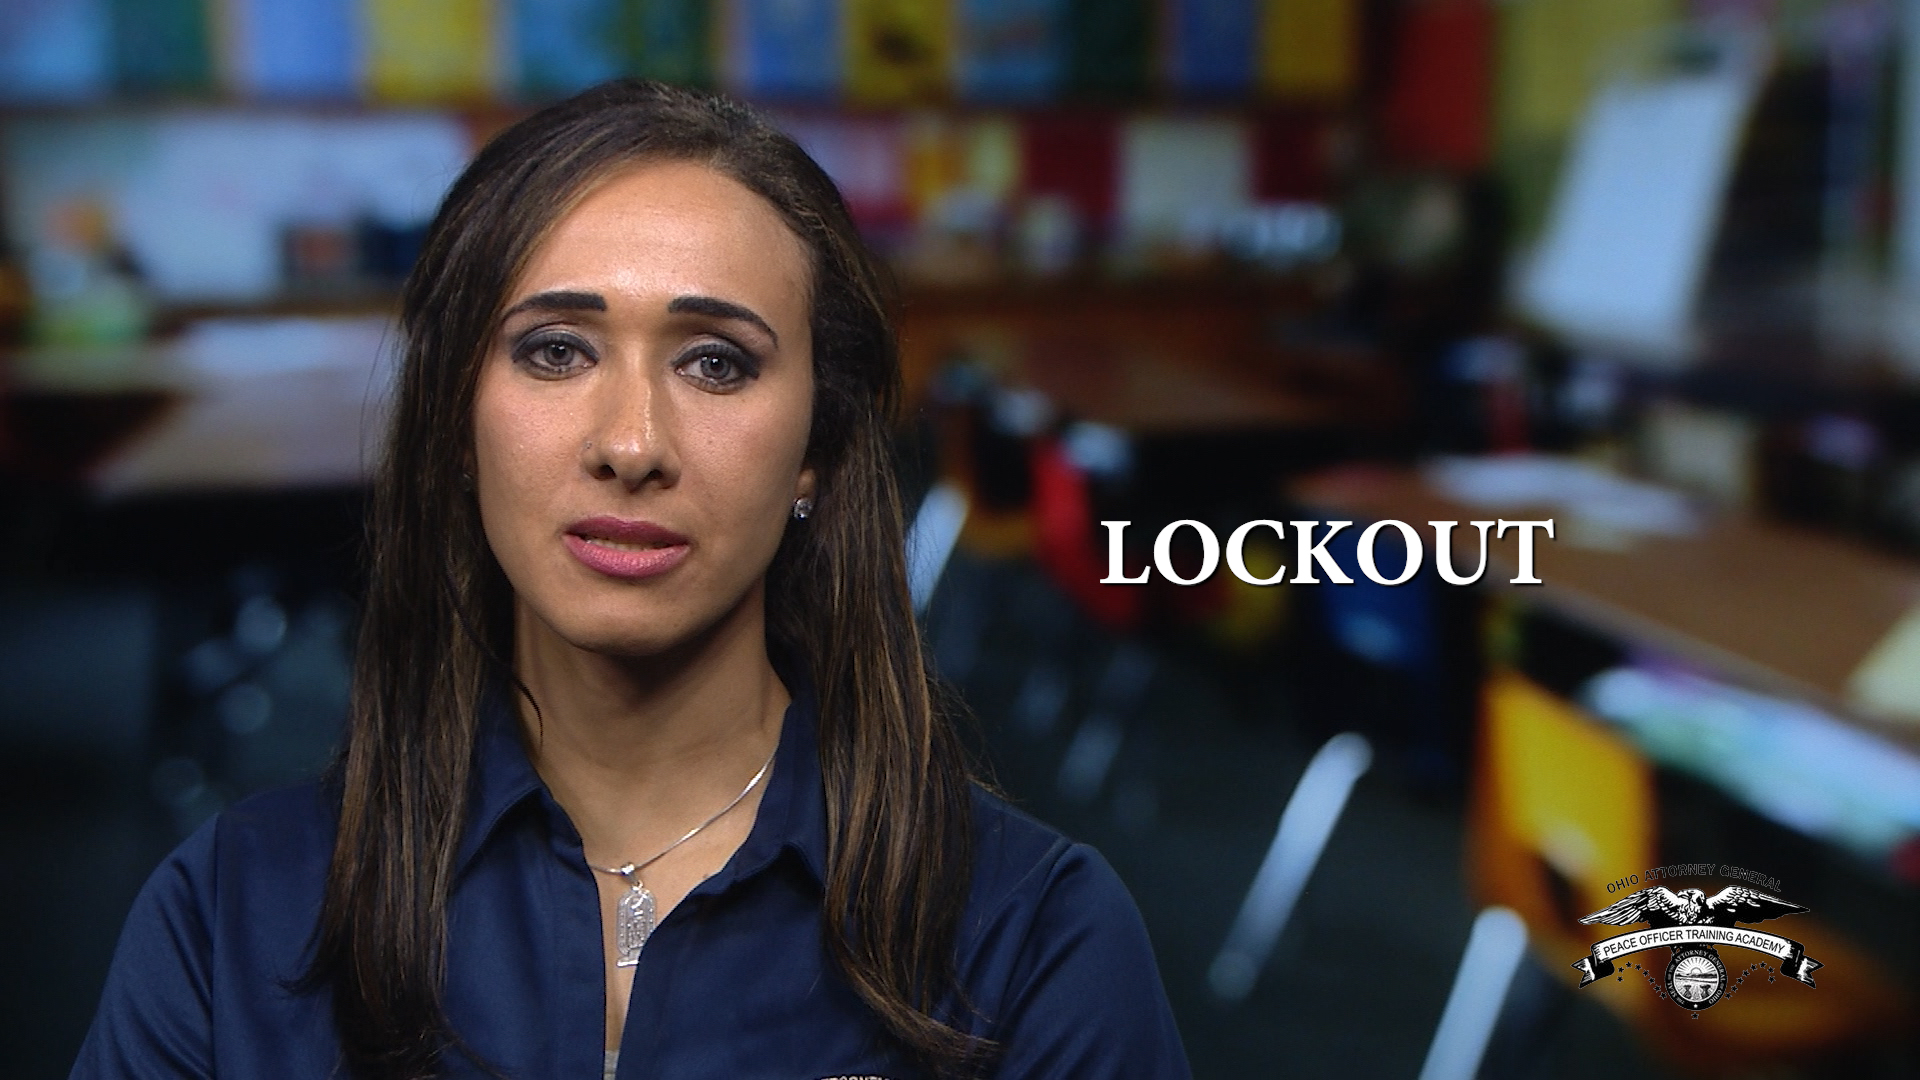 Video 4: Lockout